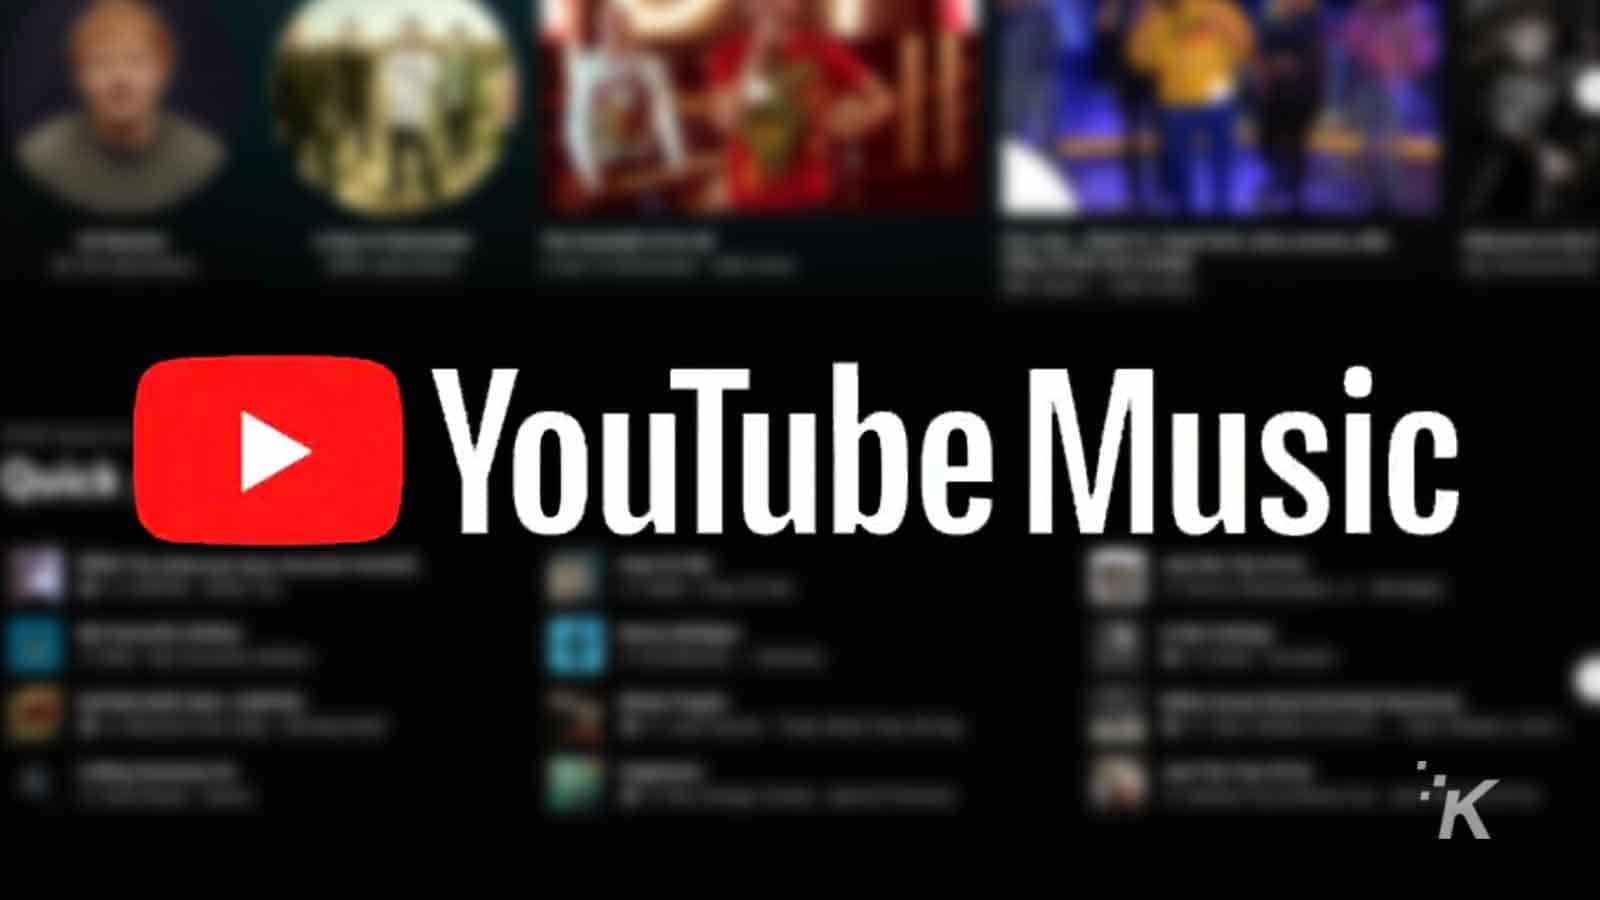  youtube music ios   500   